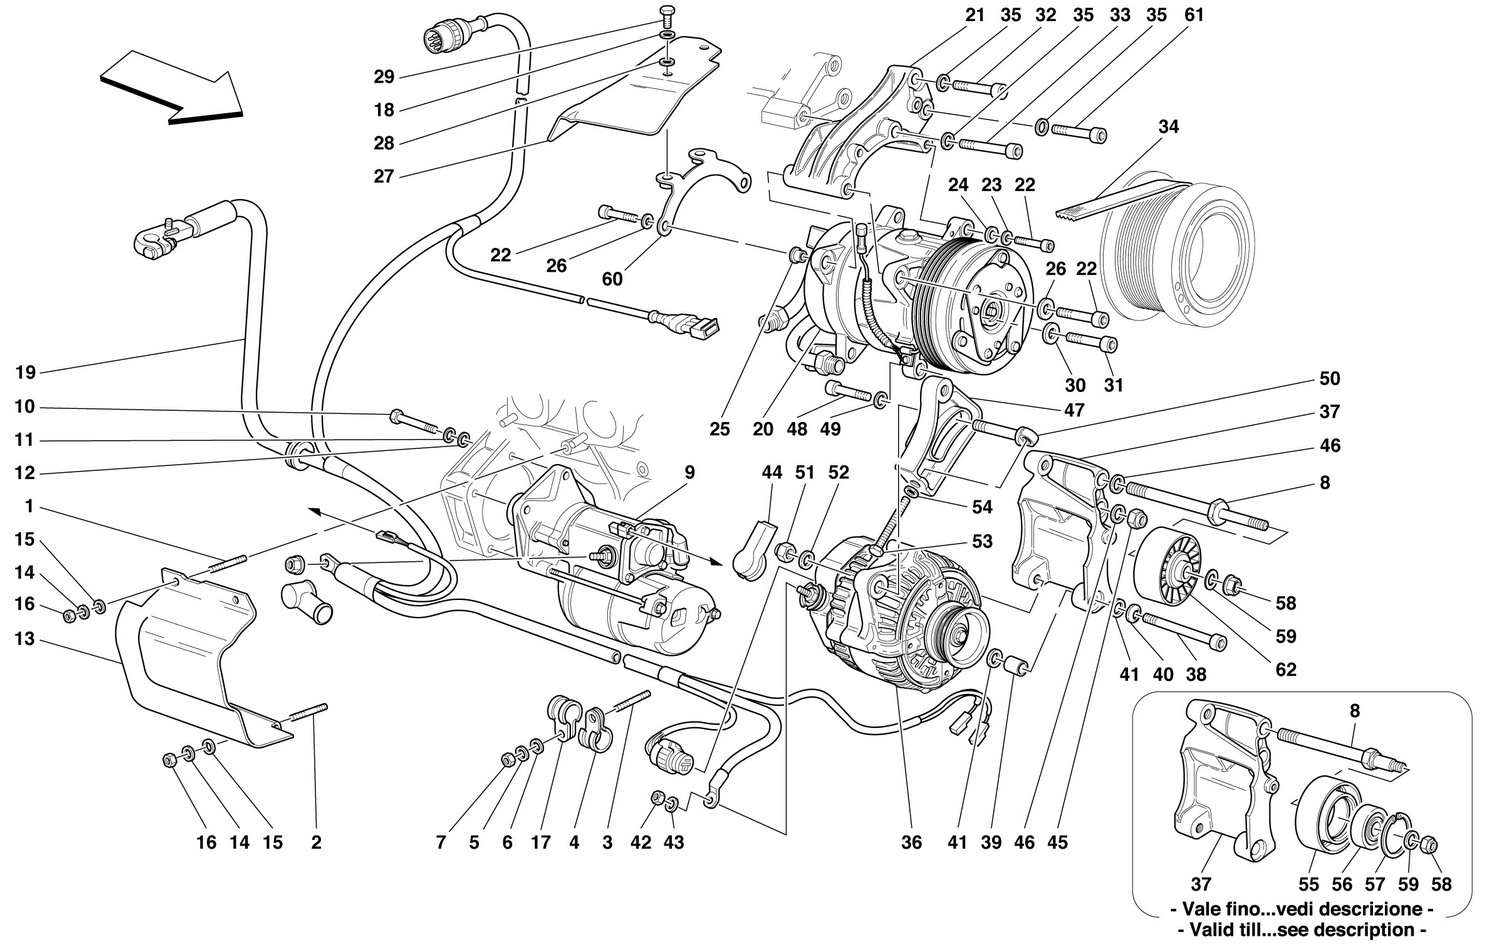 Schematic: Alternator - Starting Motor - Air Conditioning Compressor